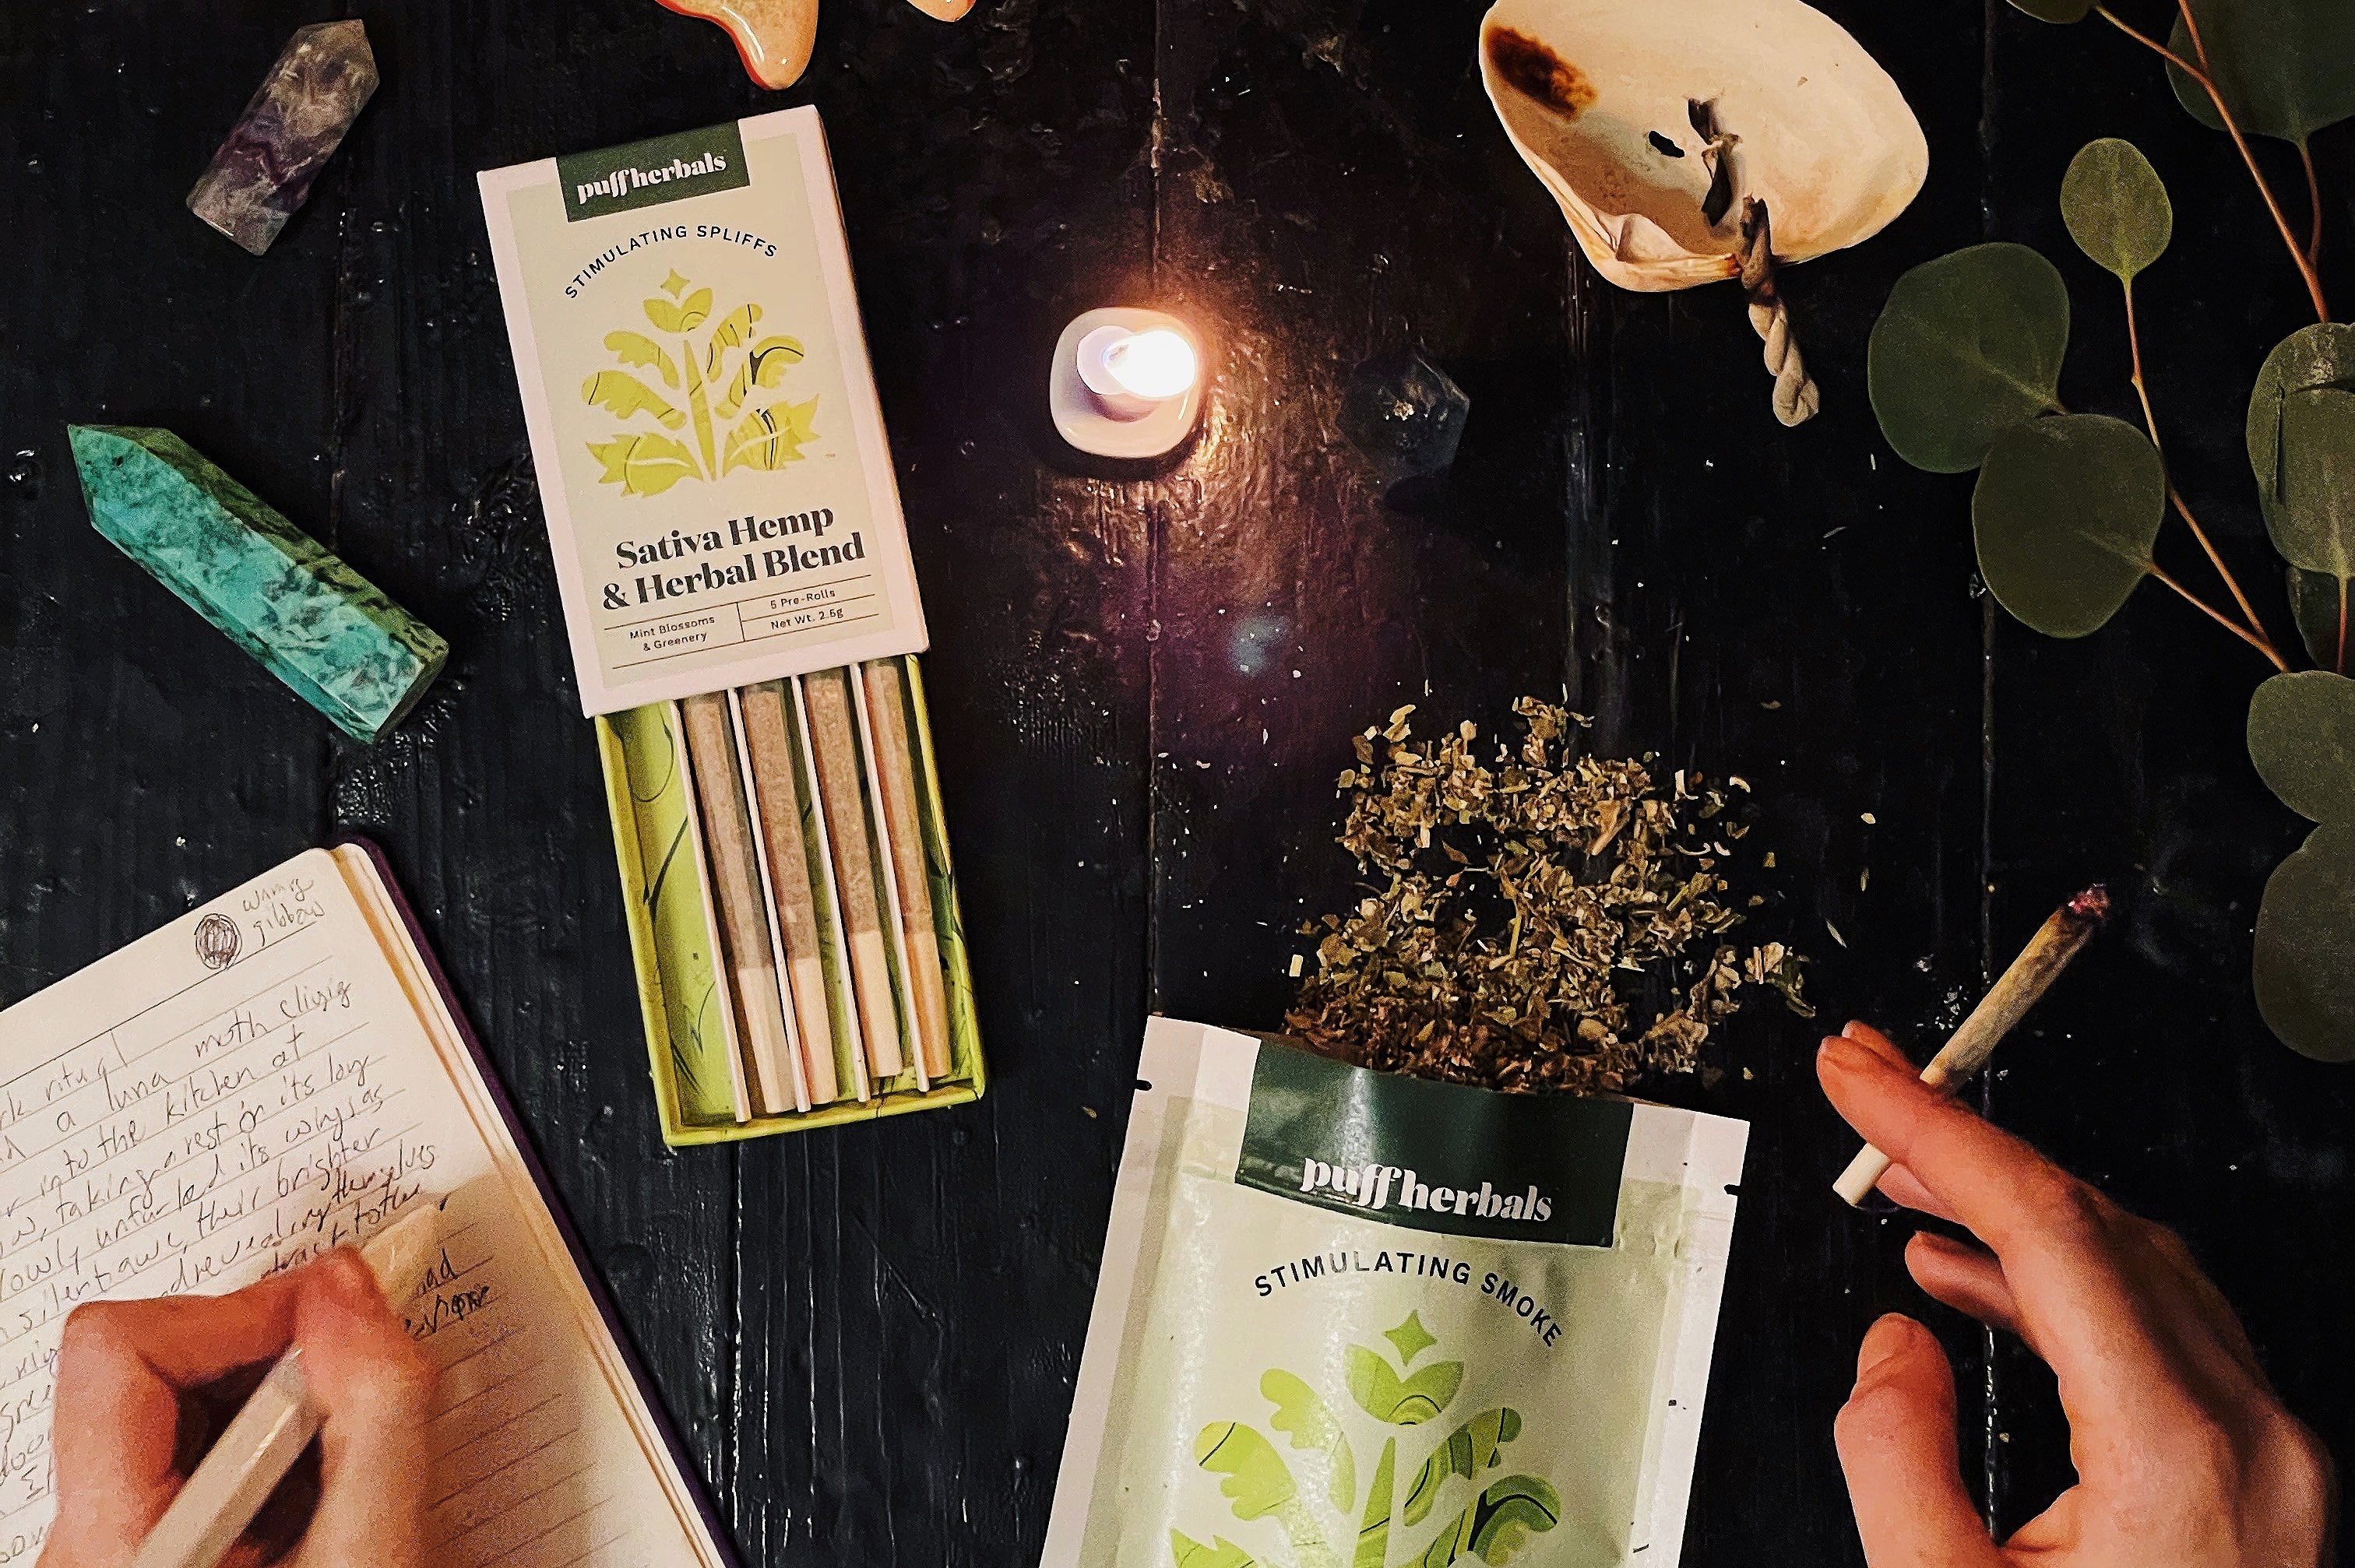 Lit Rituals on Instagram: Smokable Herbs Workshop happening on 3